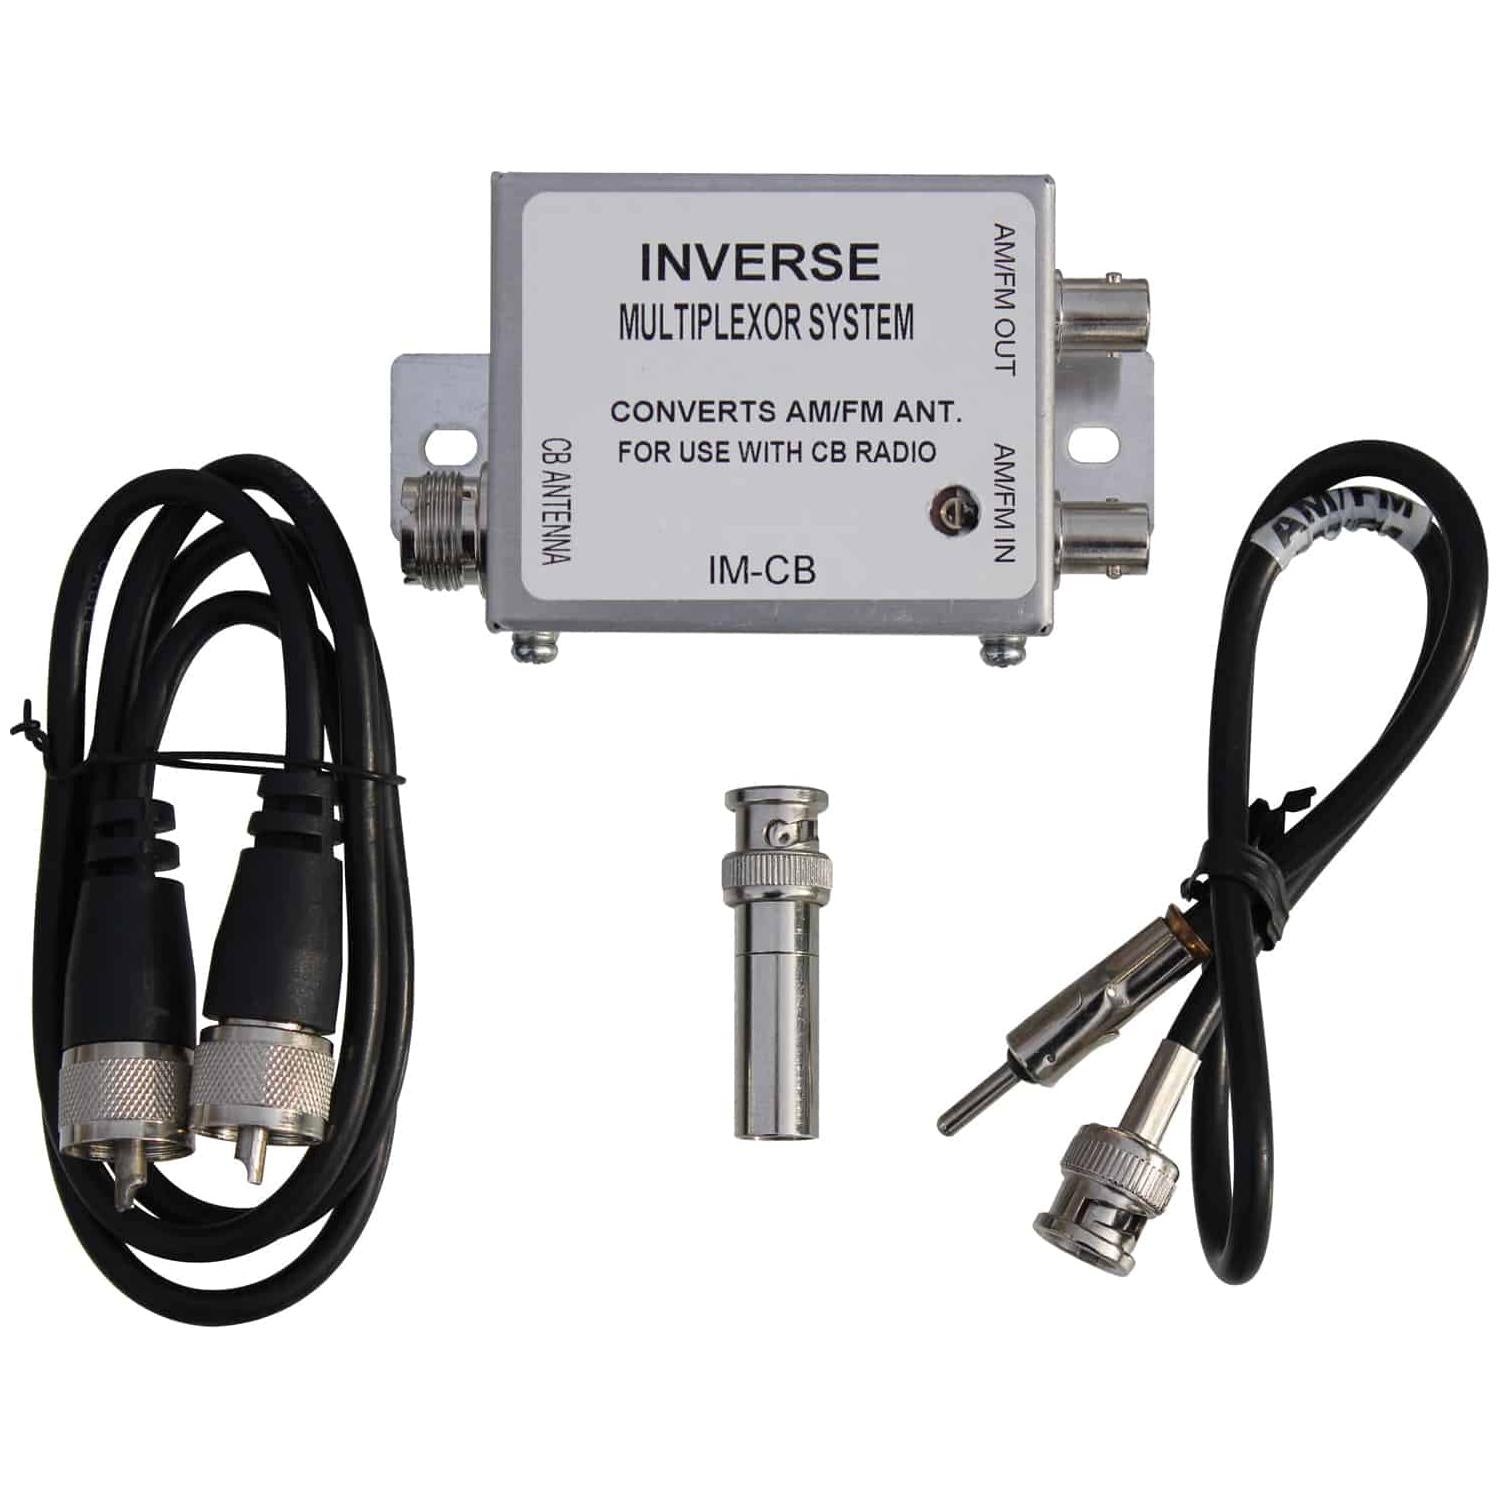 ProComm IM-CB Inverse Multiplexor System Converts AM/FM Antenna w/ CB Radio